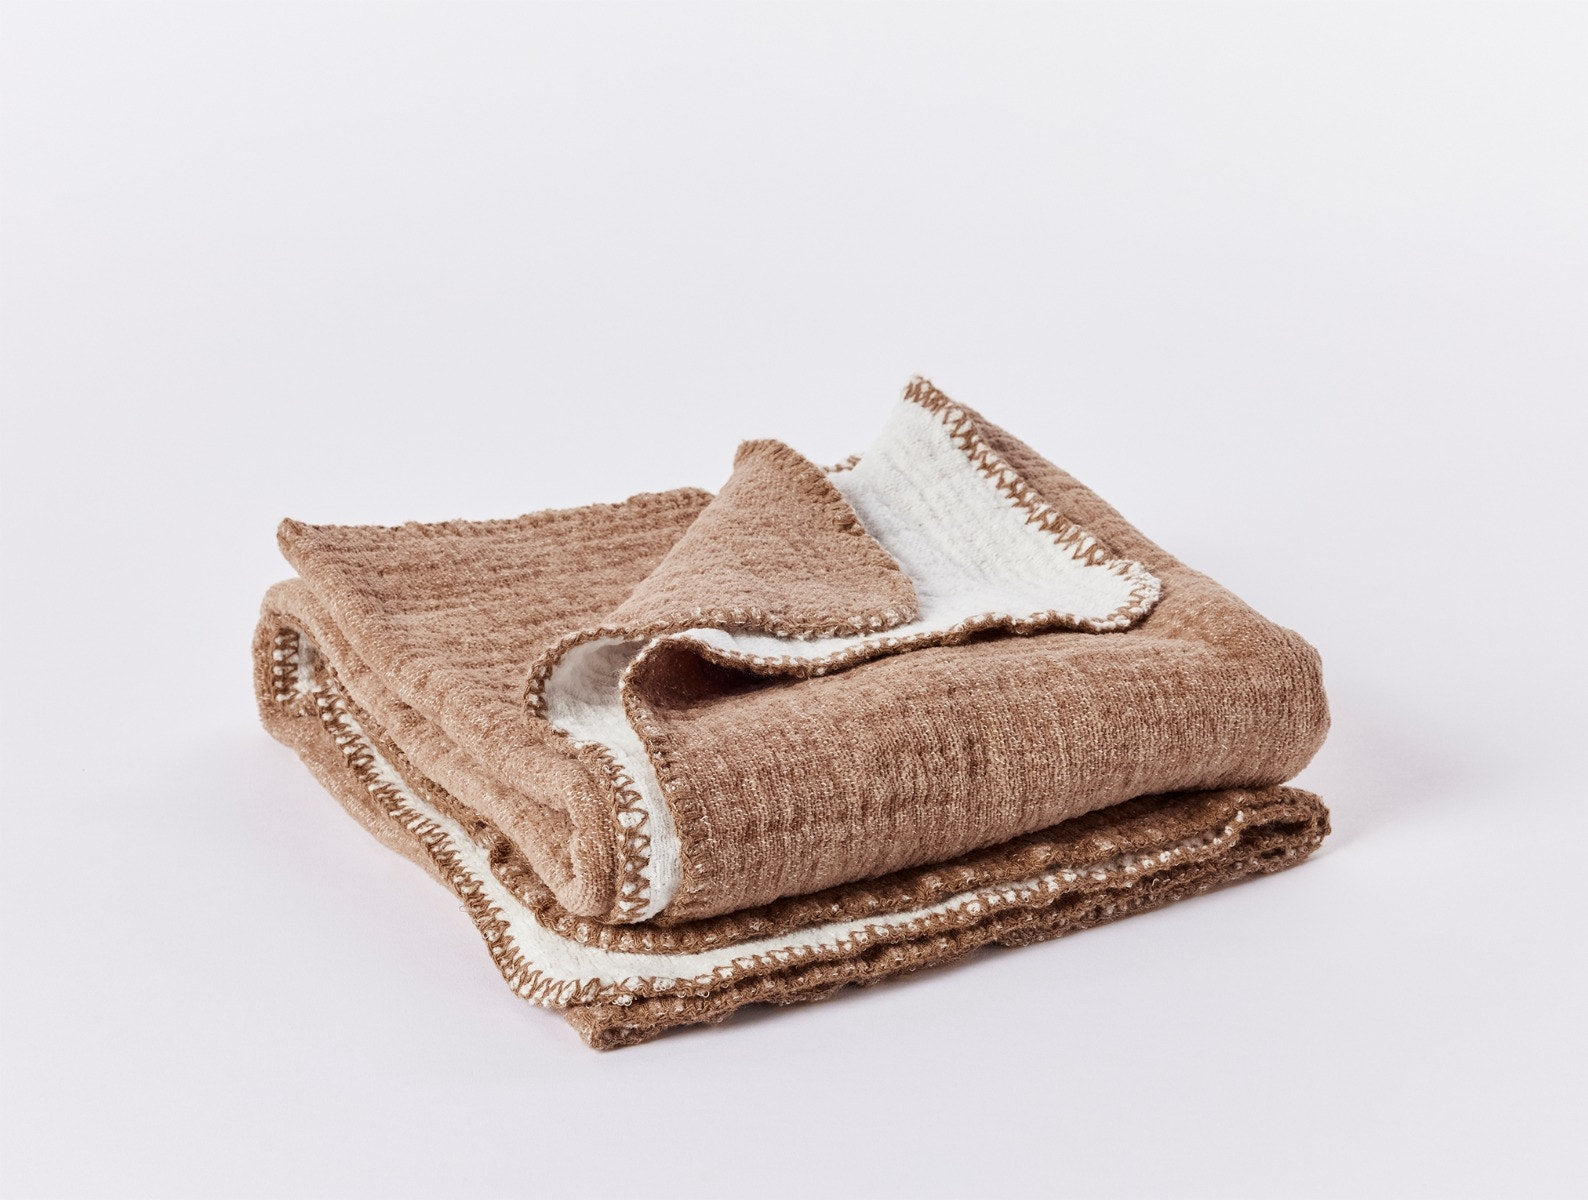 Cozy Cotton Organic Baby Blanket 